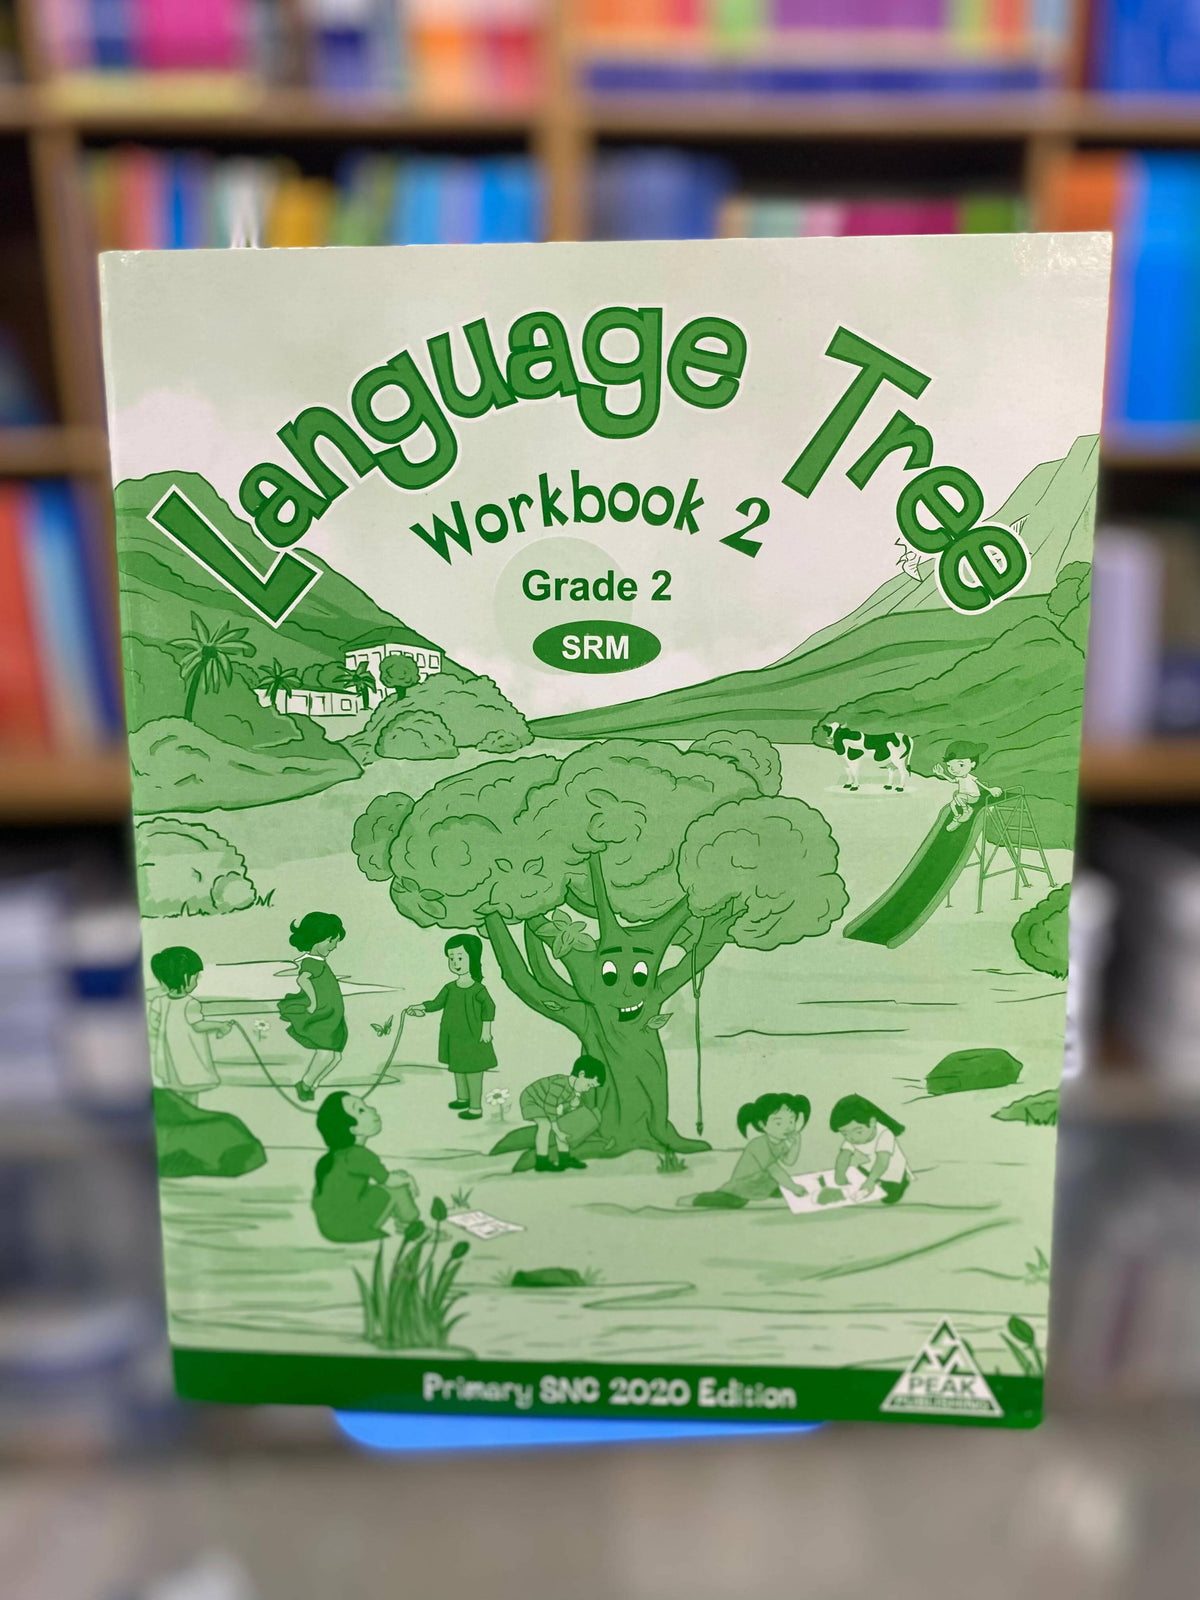 PEAK PUBLISHING | LANGUAGE TREE STUDENT BOOK 2 - ValueBox